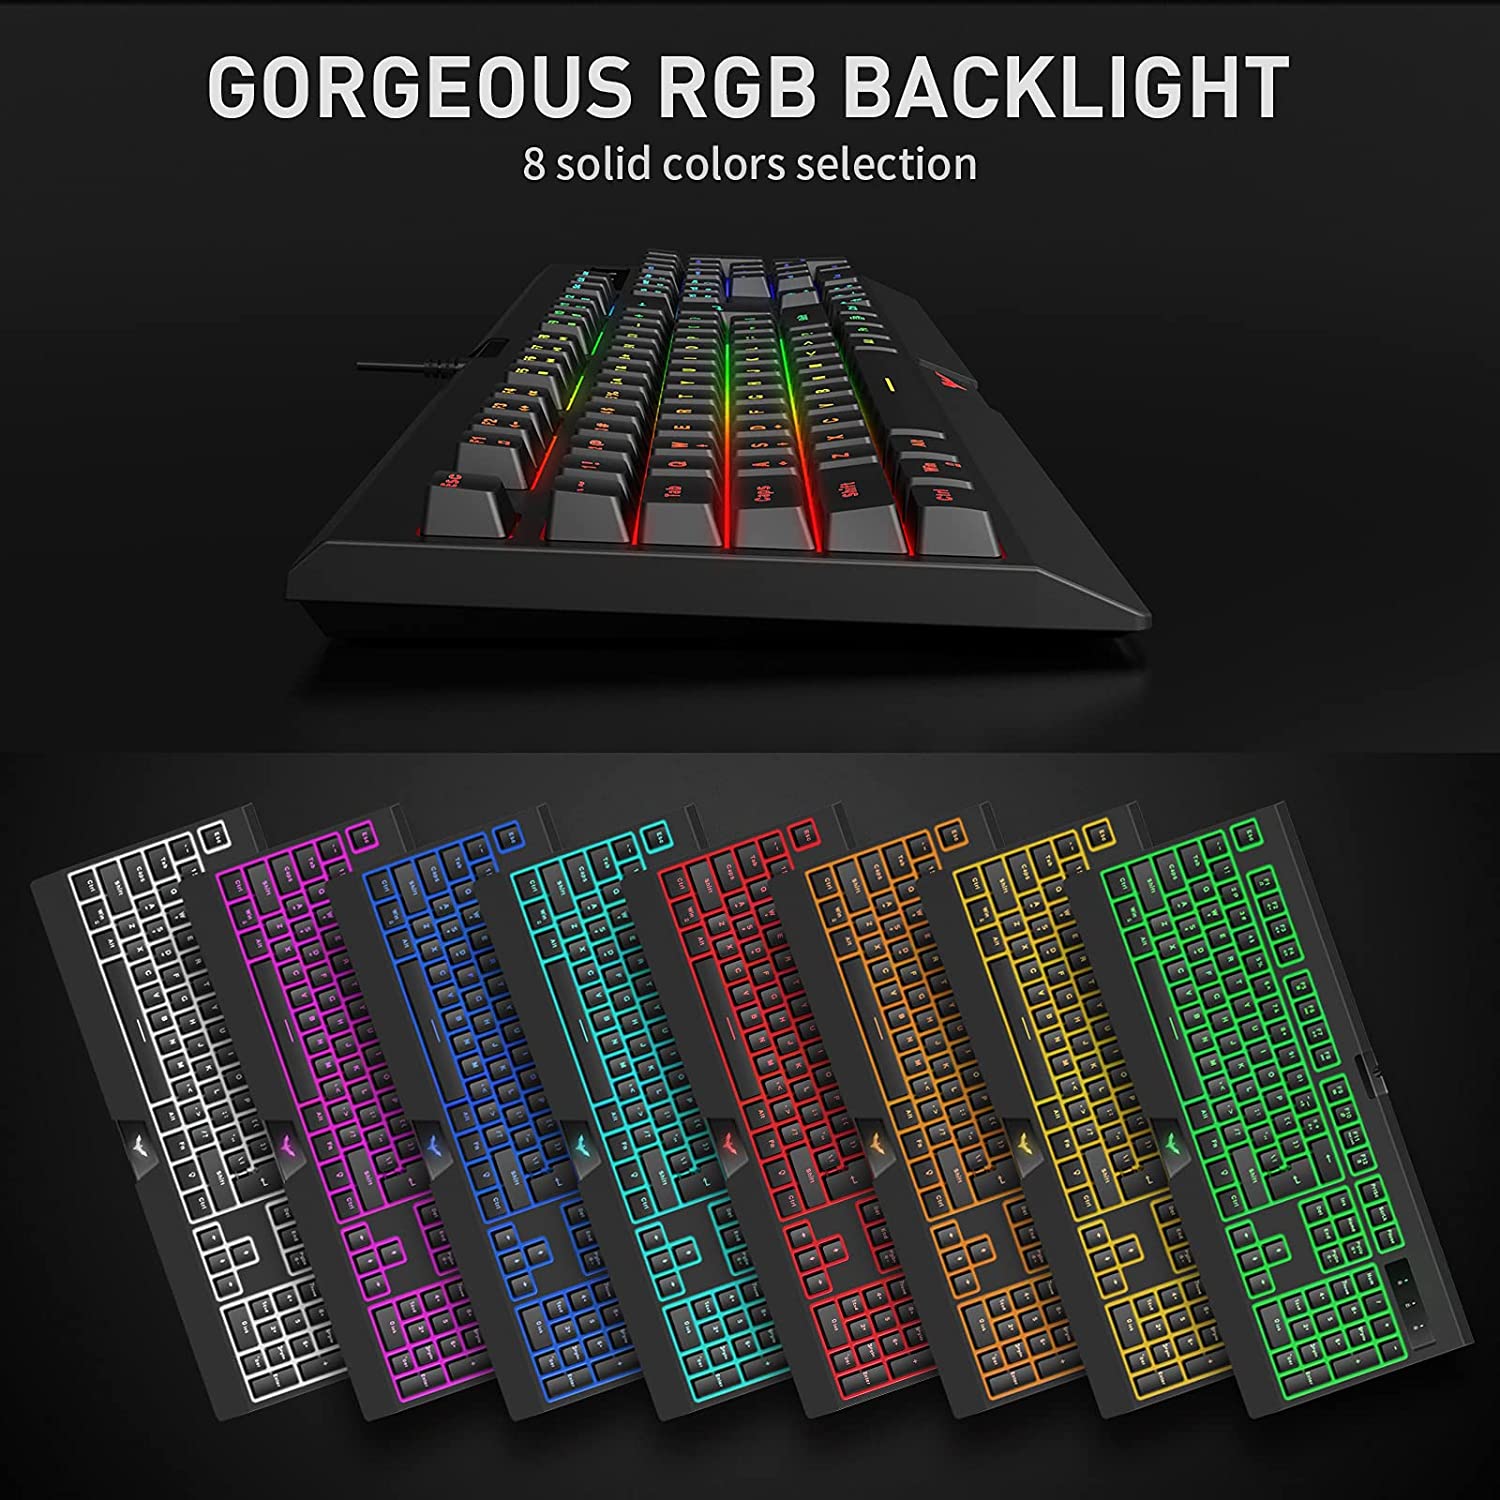 HAVIT KB854L RGB Gaming Keyboard & 6400 DPI Programmable Mouse Combo, 104-Key 7 Color Backlit